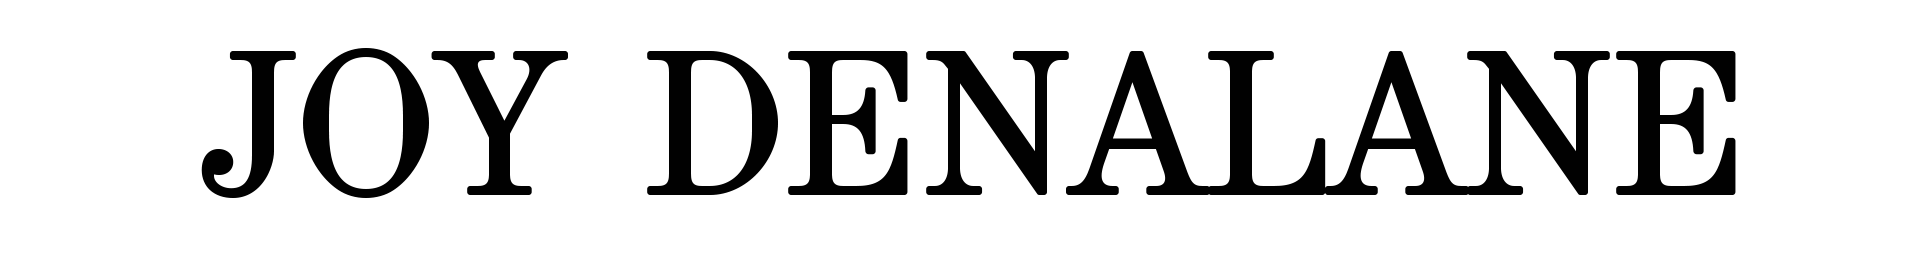 Joy Denalane Logo